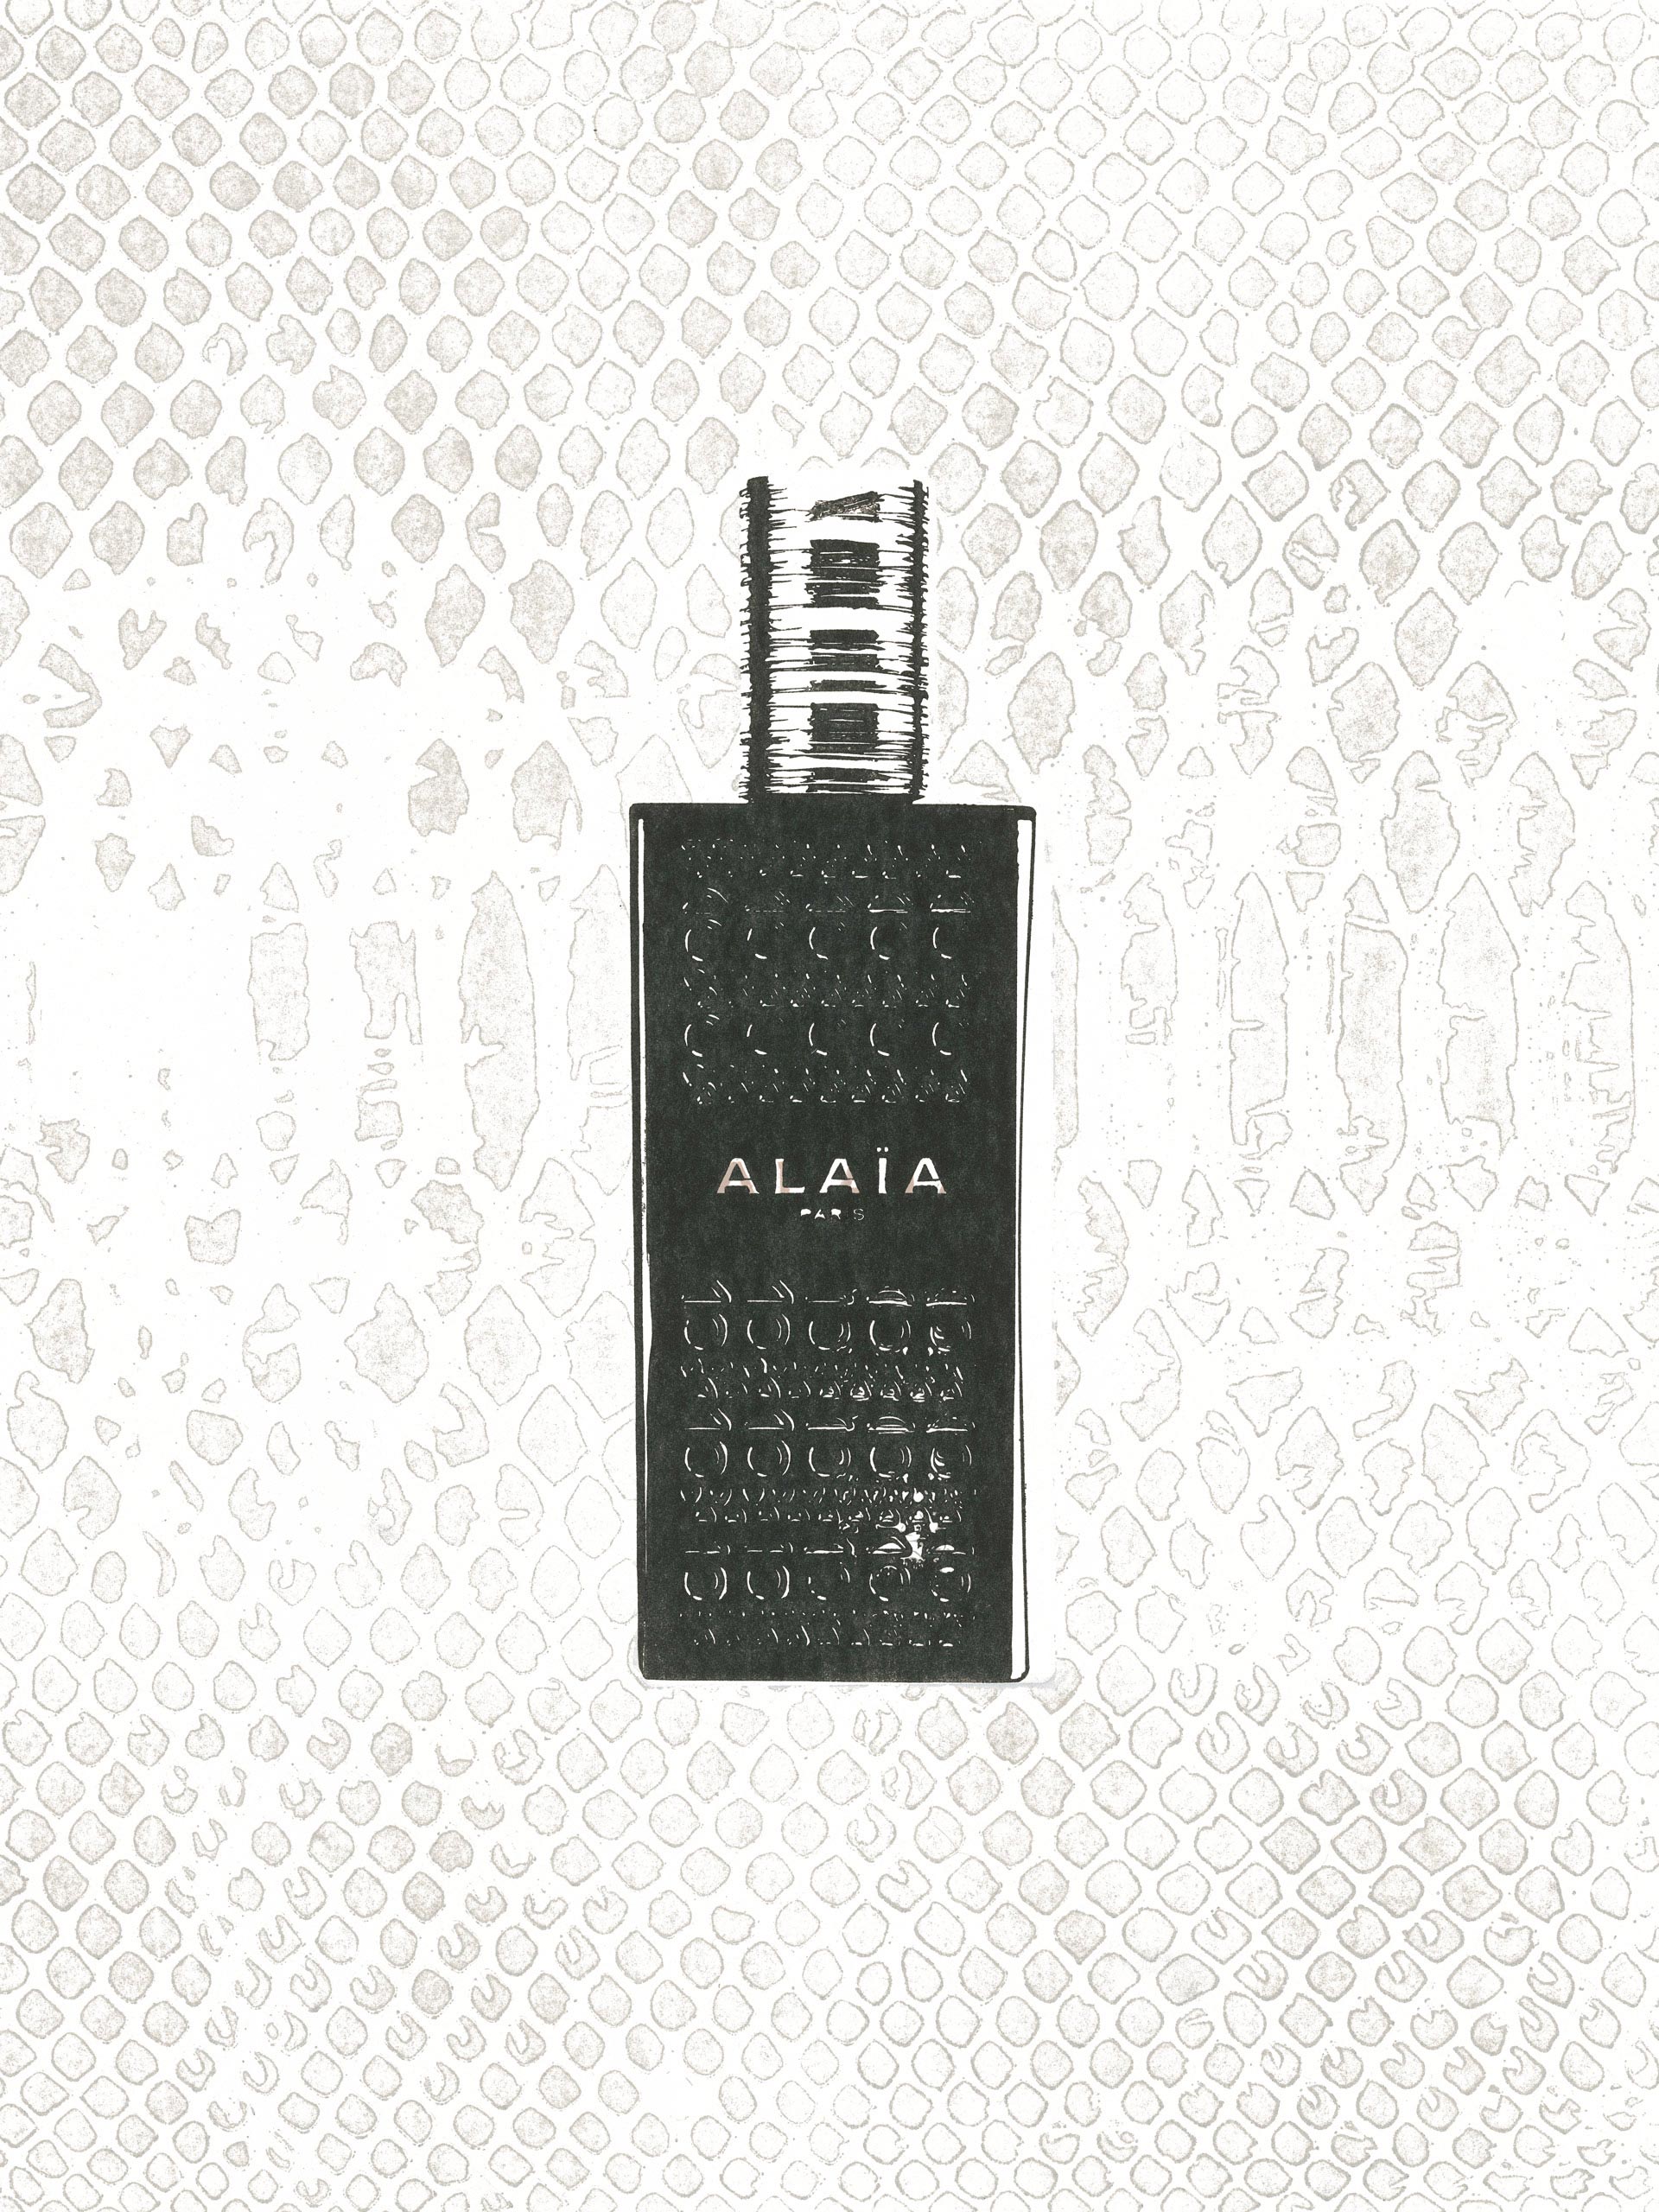 Alaïa Perfume © Aurore de la Morinerie